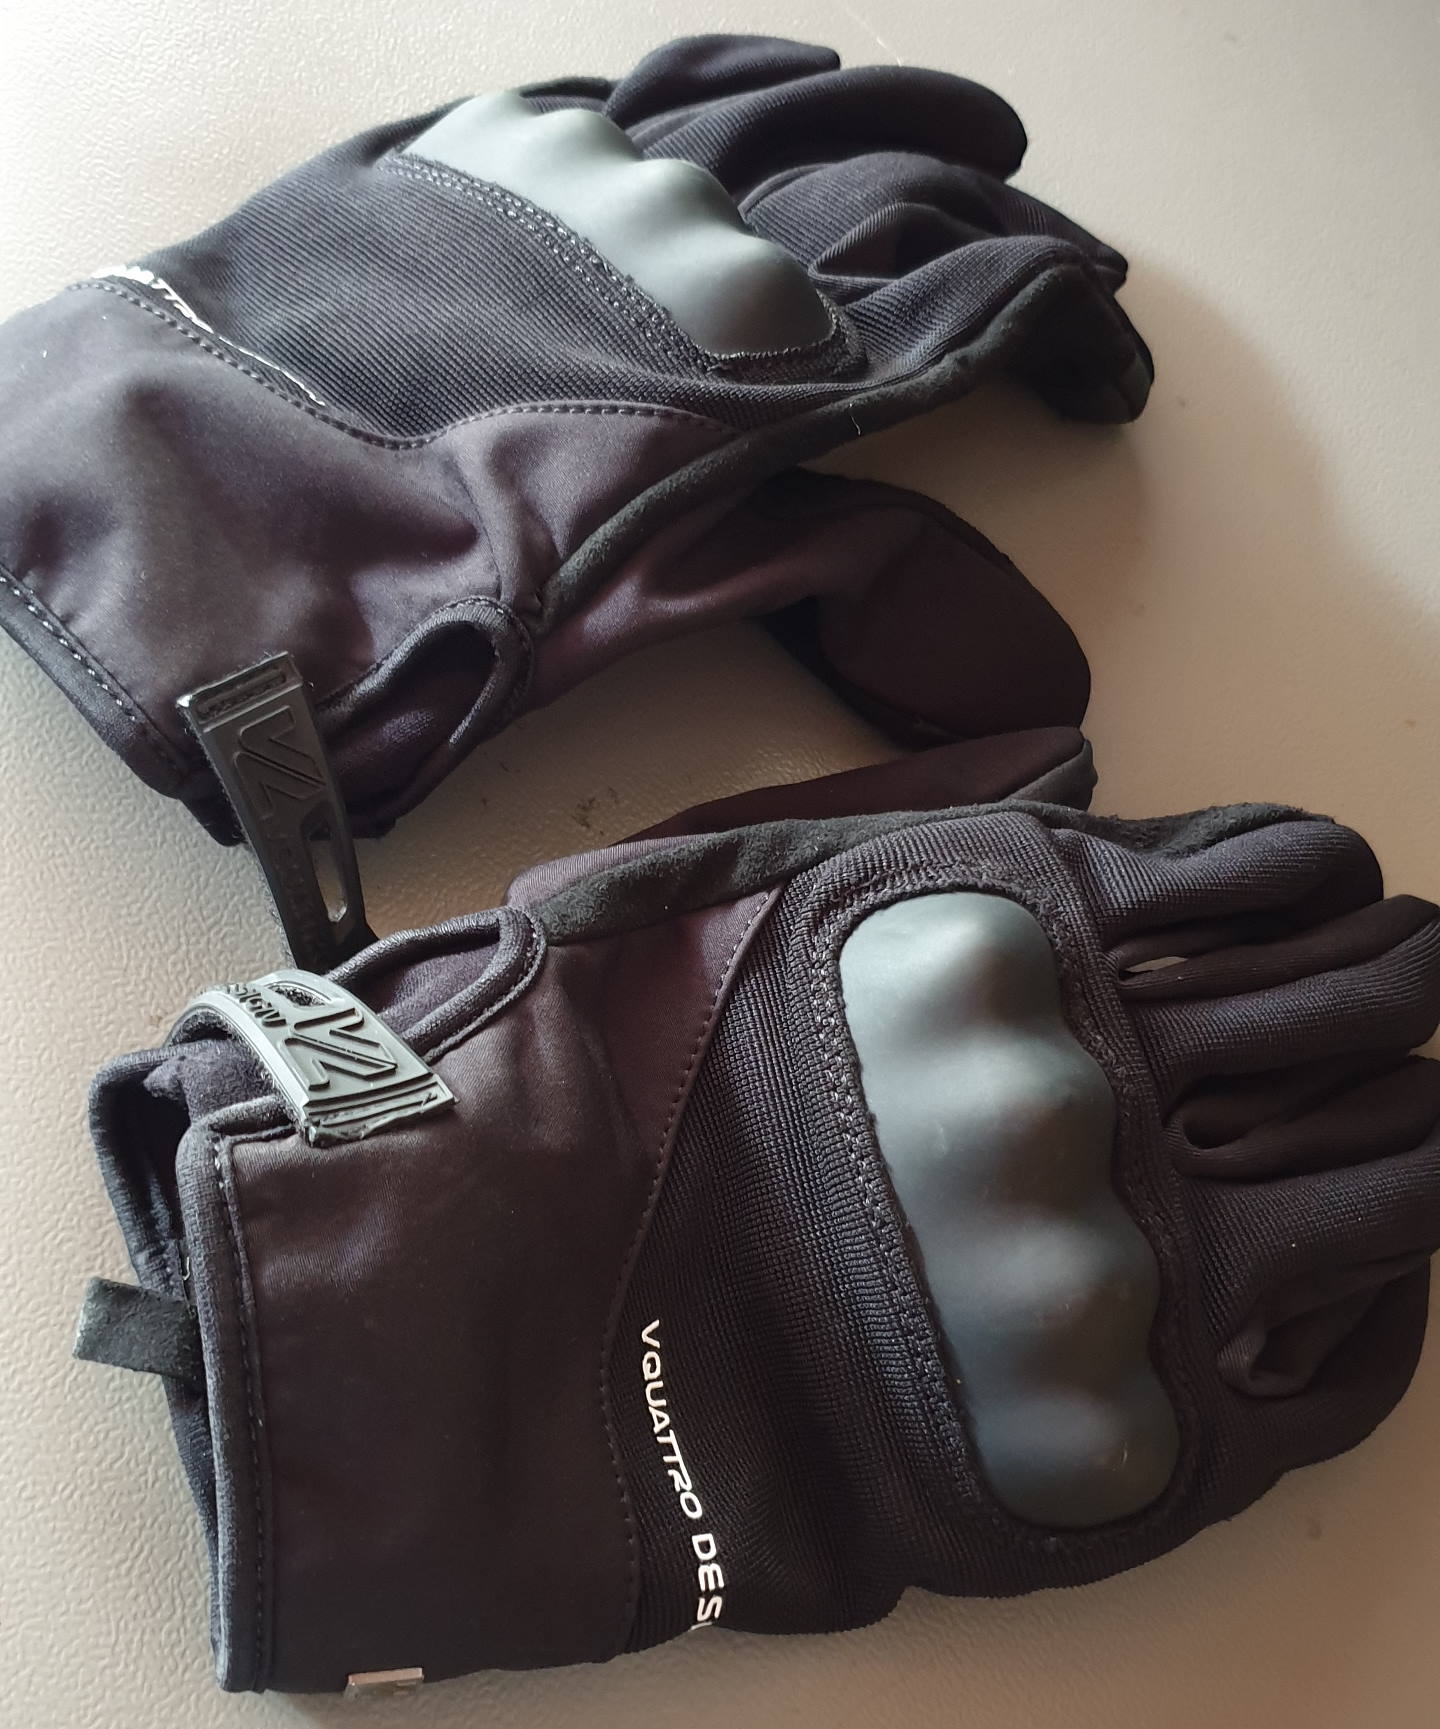 Motor cycle gear: Jacket, Helmet, Boots, Gloves